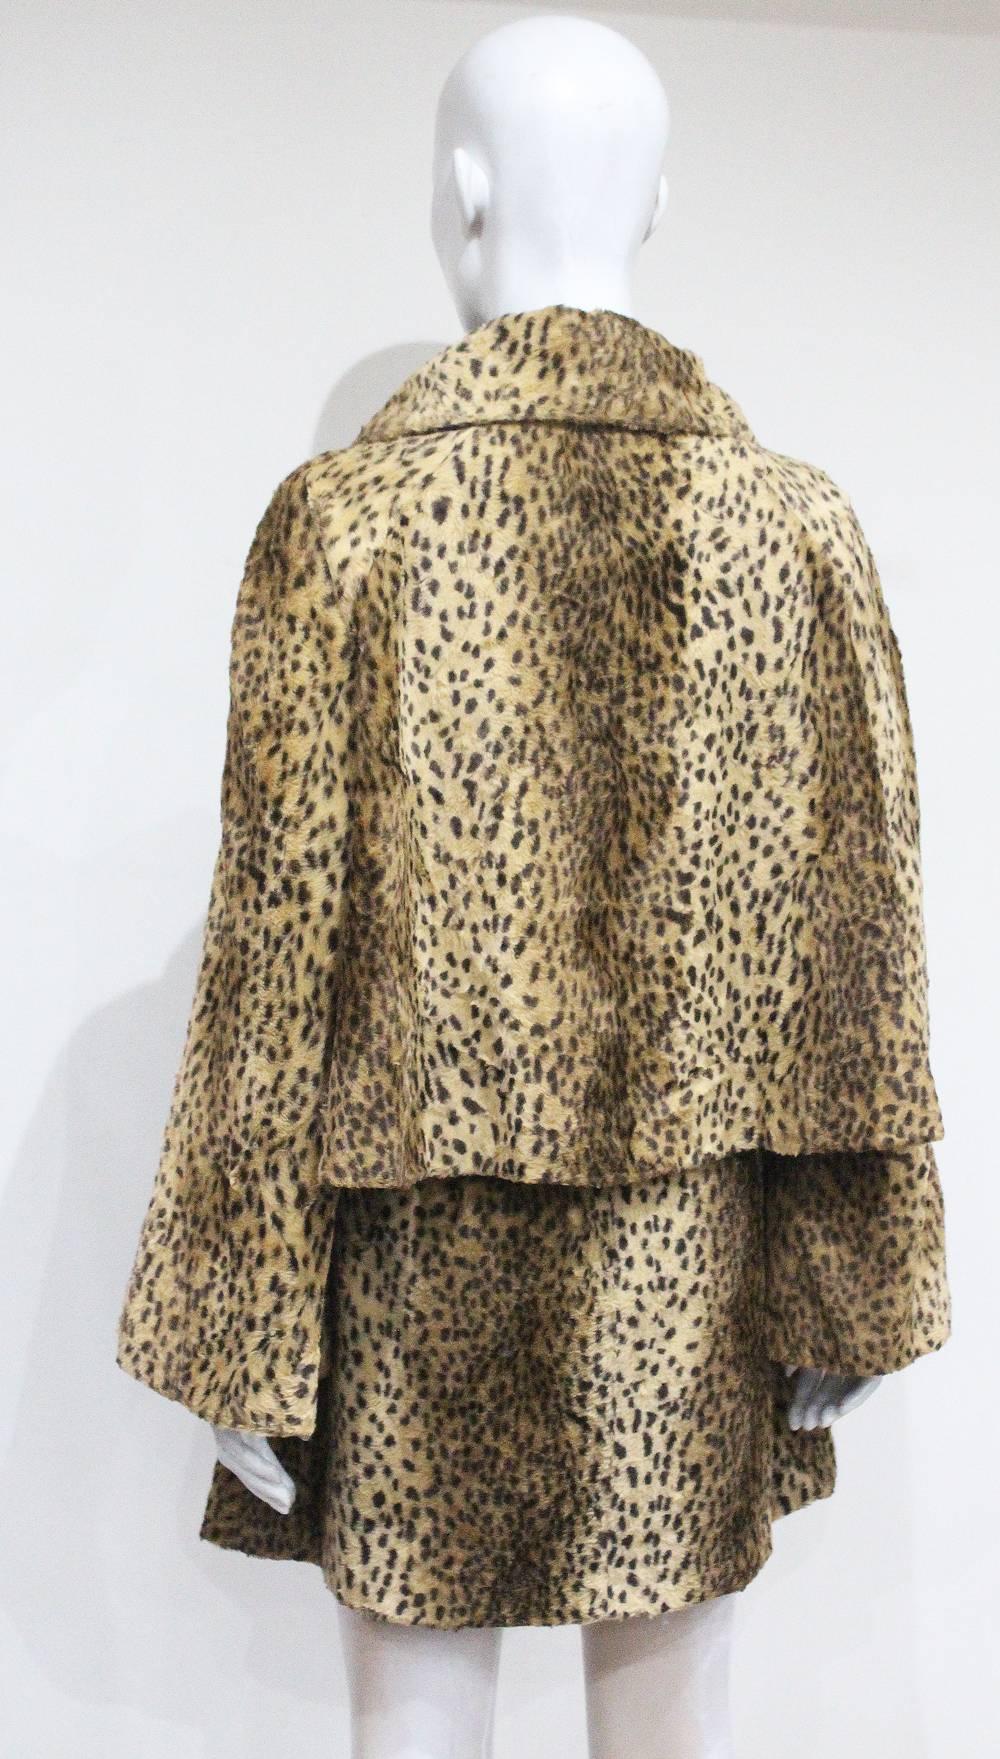 Gianni Versace cheetah print faux fur jacket and dress ensemble, c. 1990s  For Sale 2